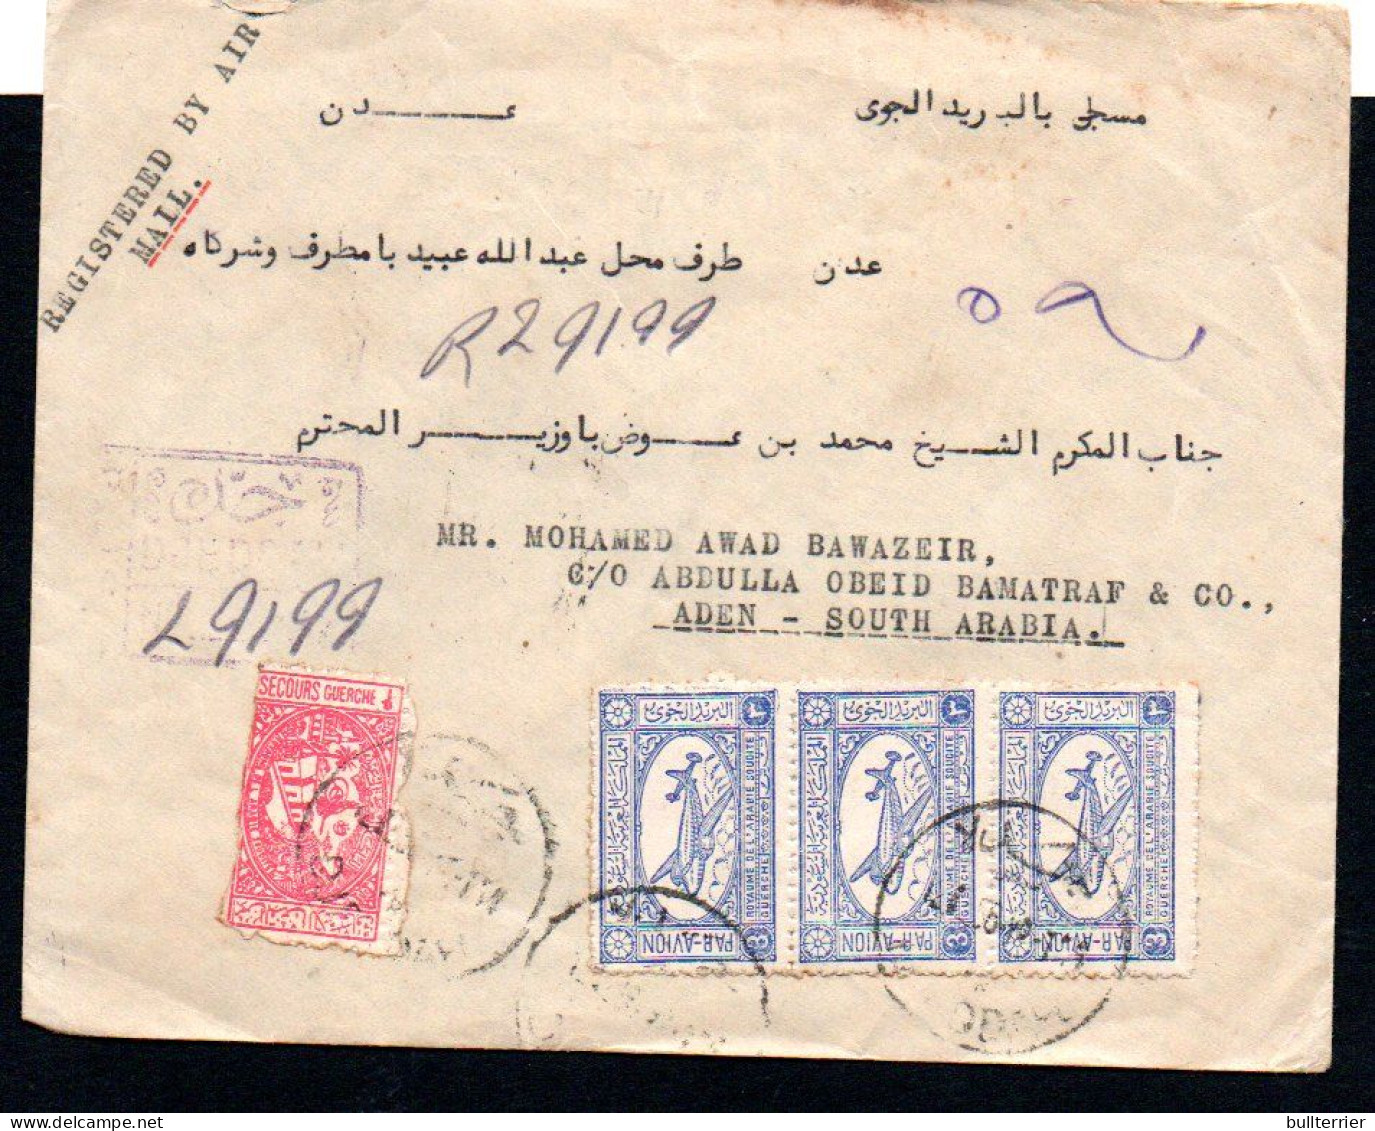 SAUDI ARABIA - 1956 - REGISTERED AIRMAIL COVER  JEDDAH TO ADEN - Arabia Saudita